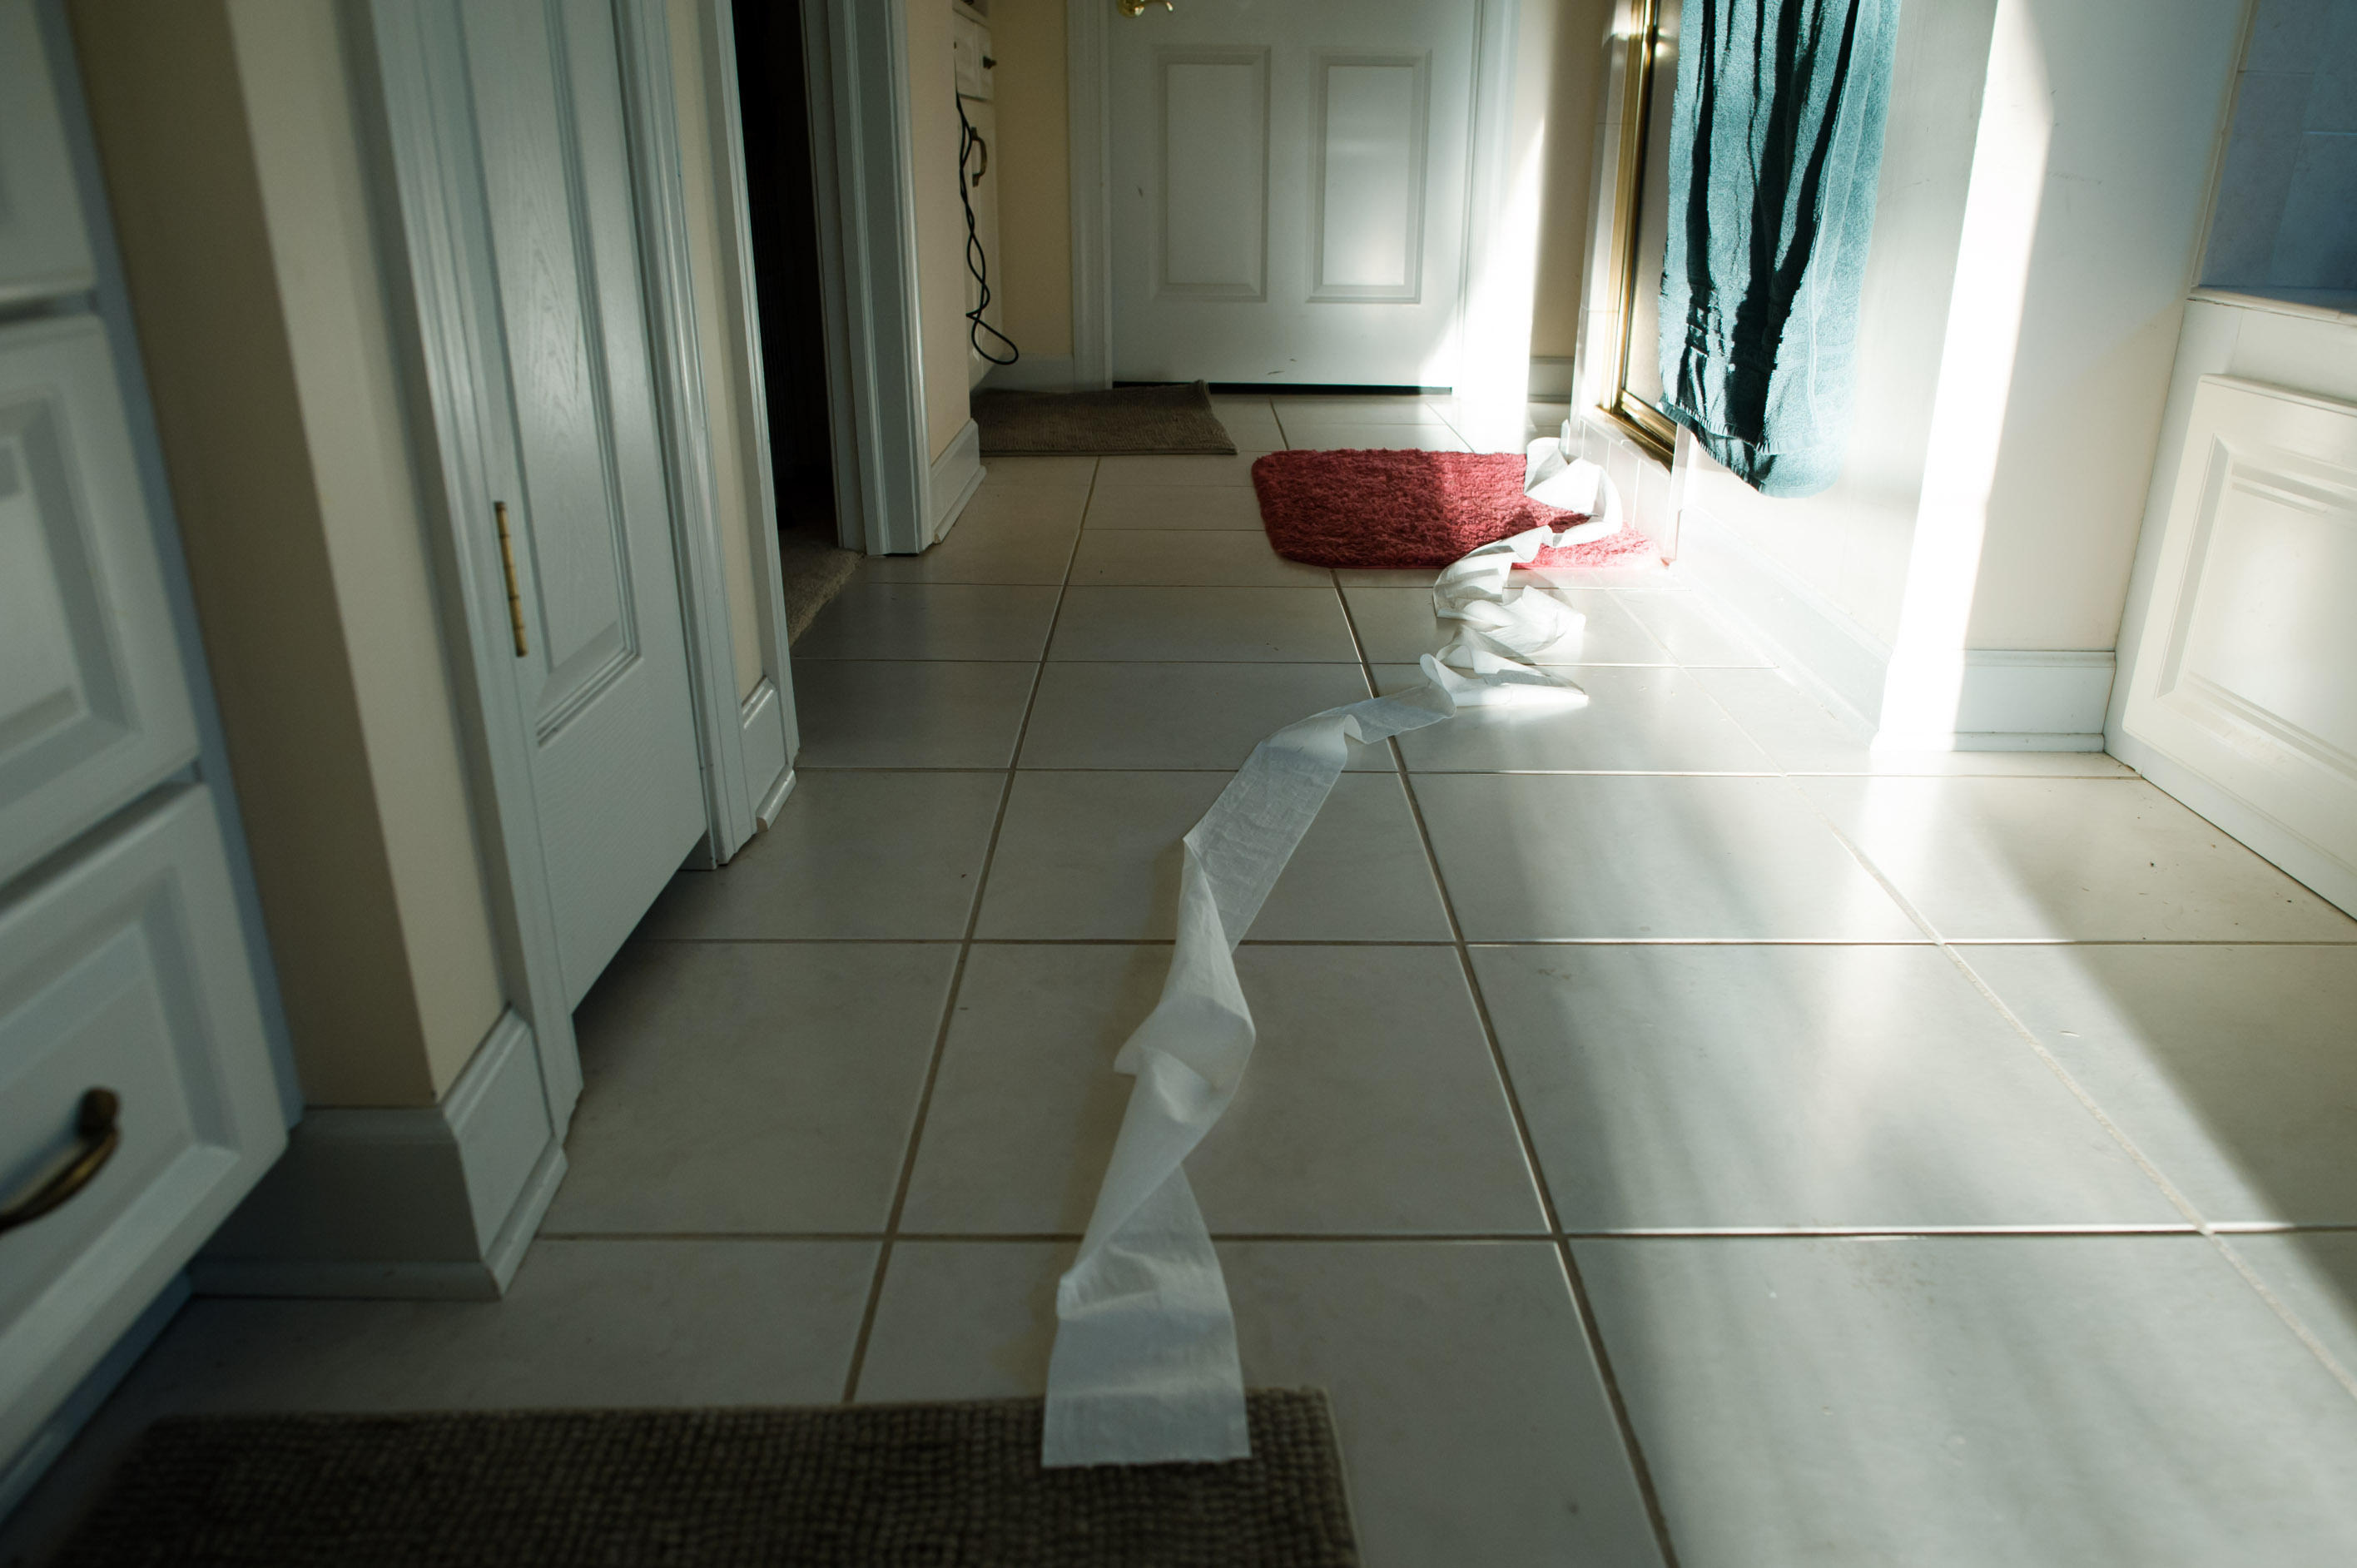 stream of toilet paper across bathroom floor - Family Documentary Photography